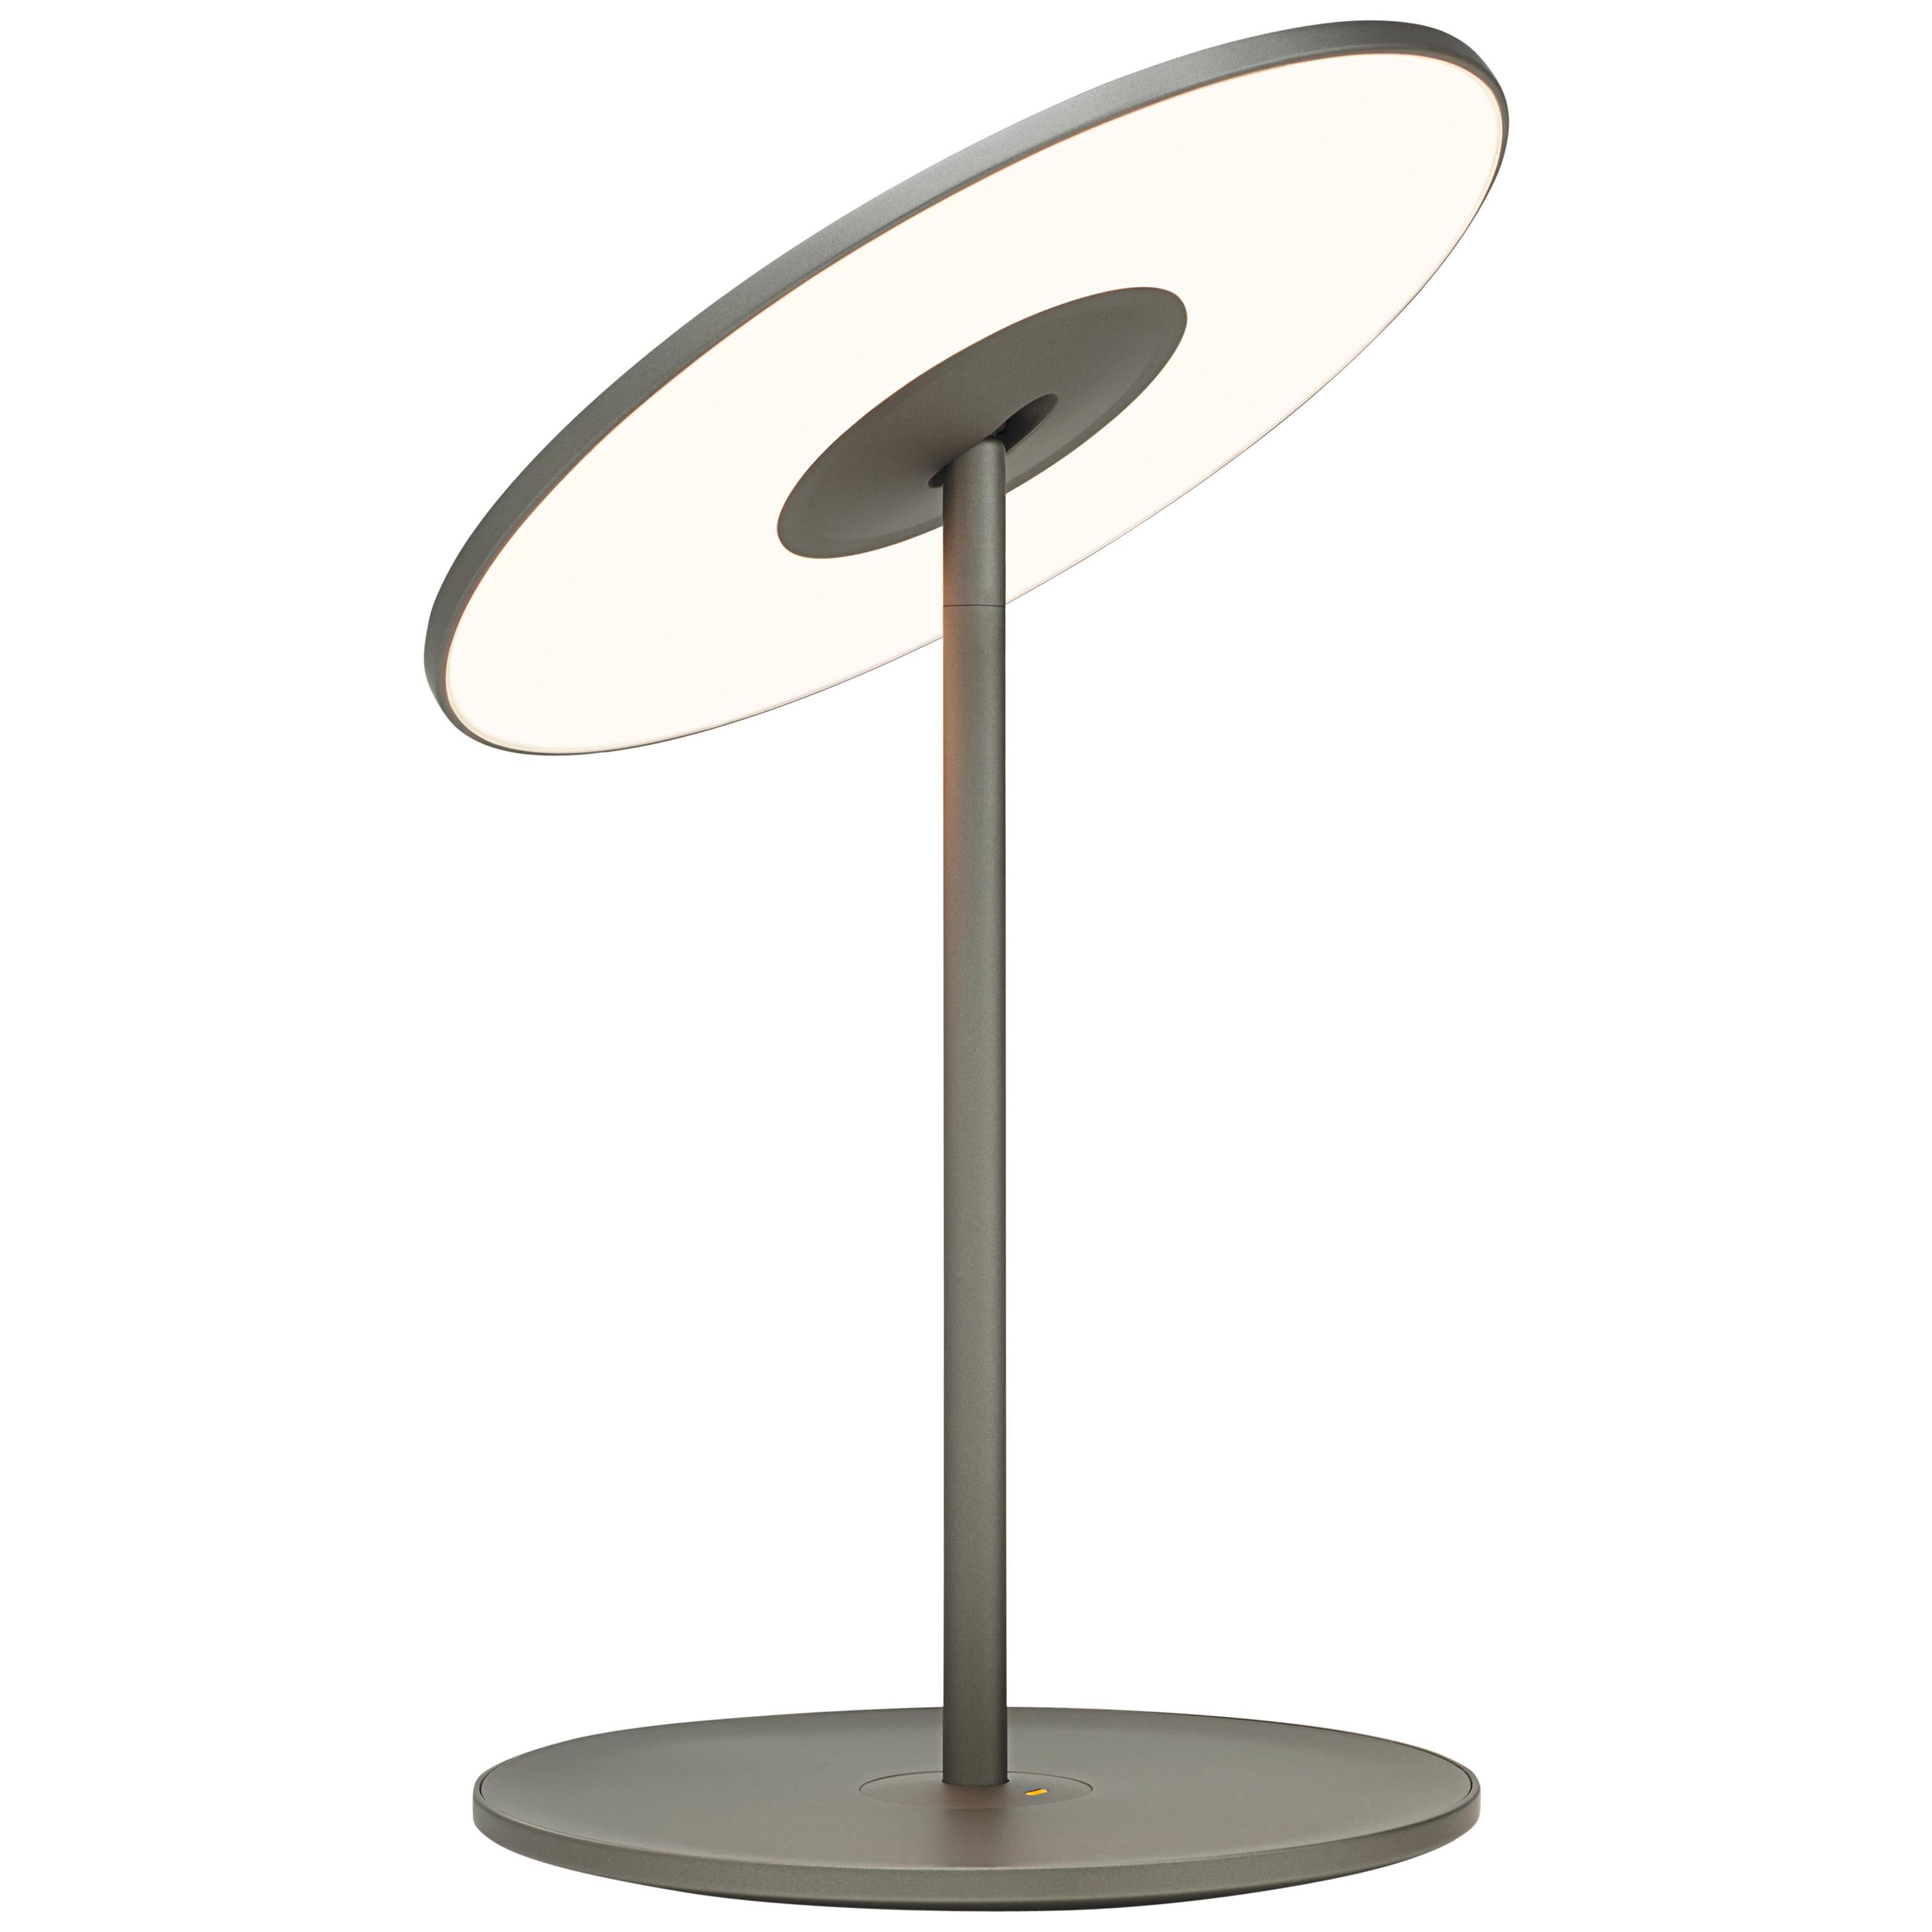 Circa Table Lamp in Graphite by Pablo Designs